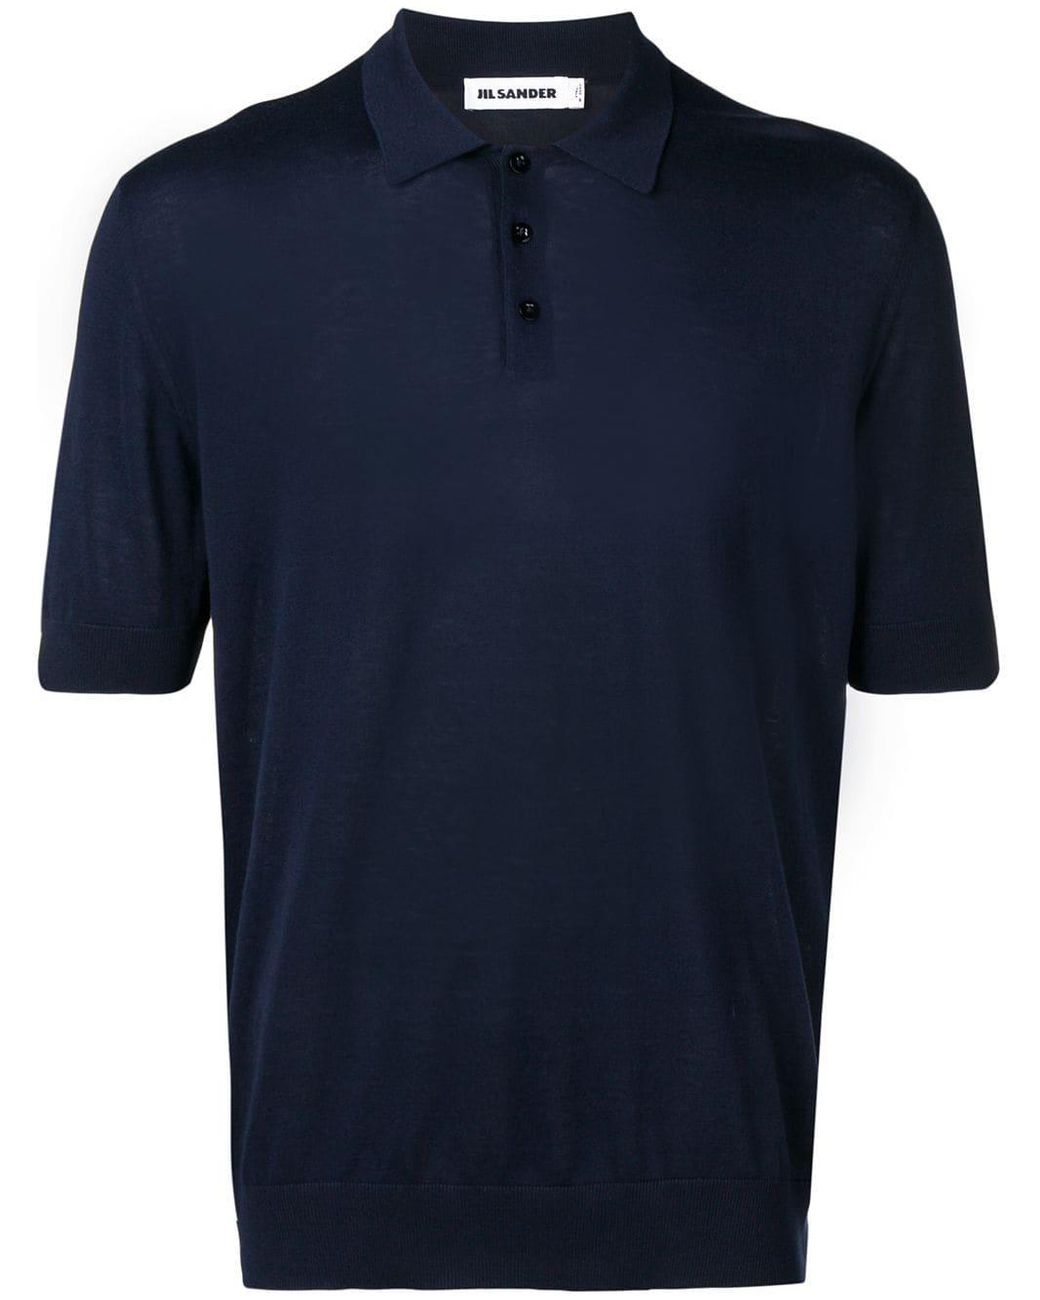 Jil Sander Cashmere Plain Polo Shirt in Blue for Men - Lyst